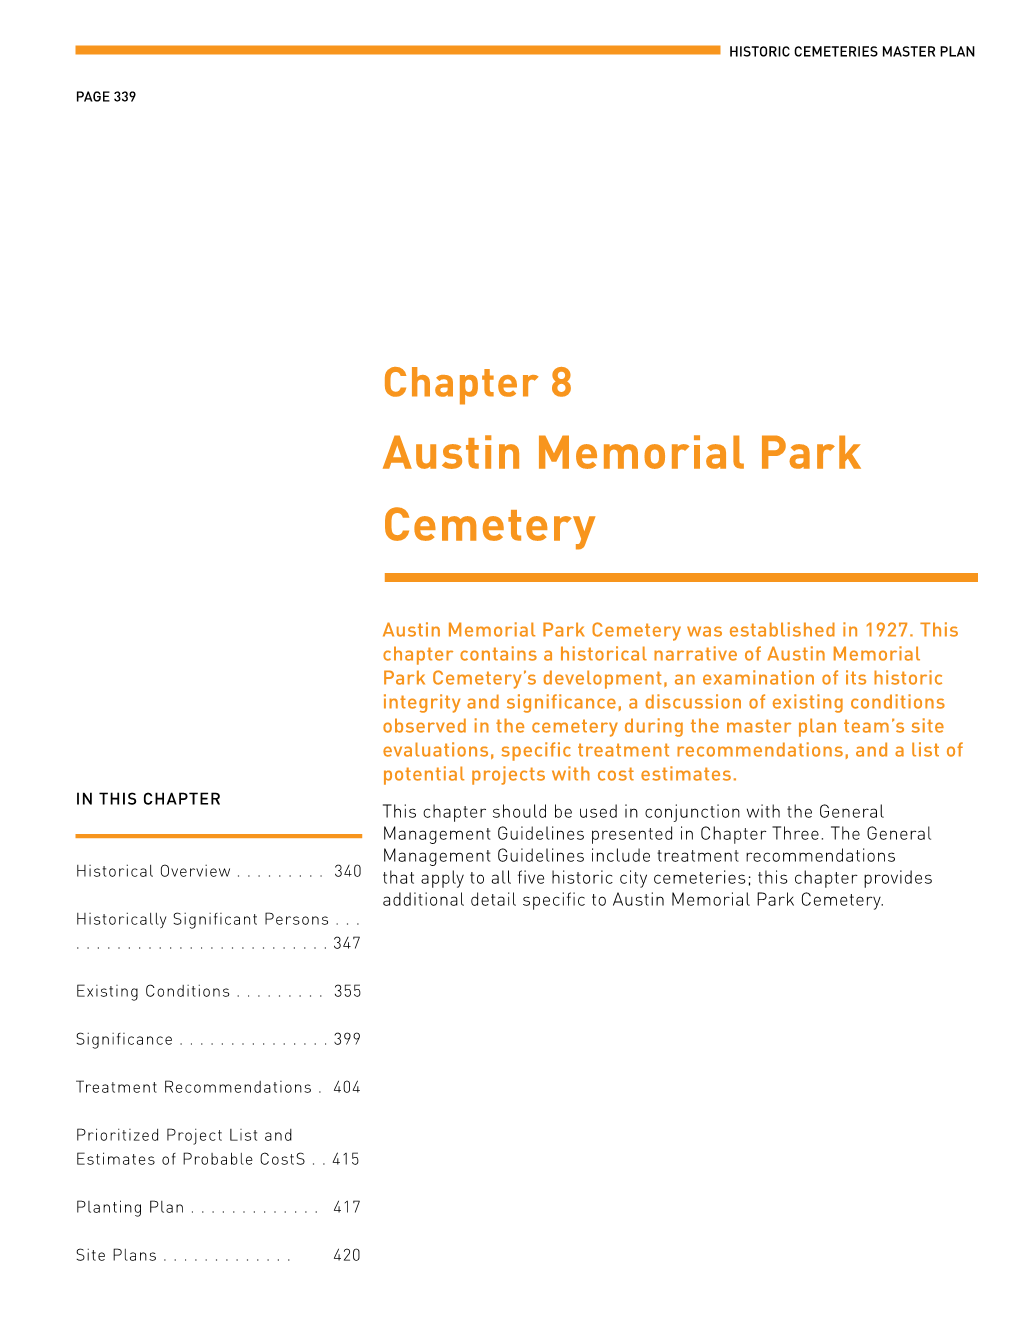 Chapter 8: Austin Memorial Park Cemetery